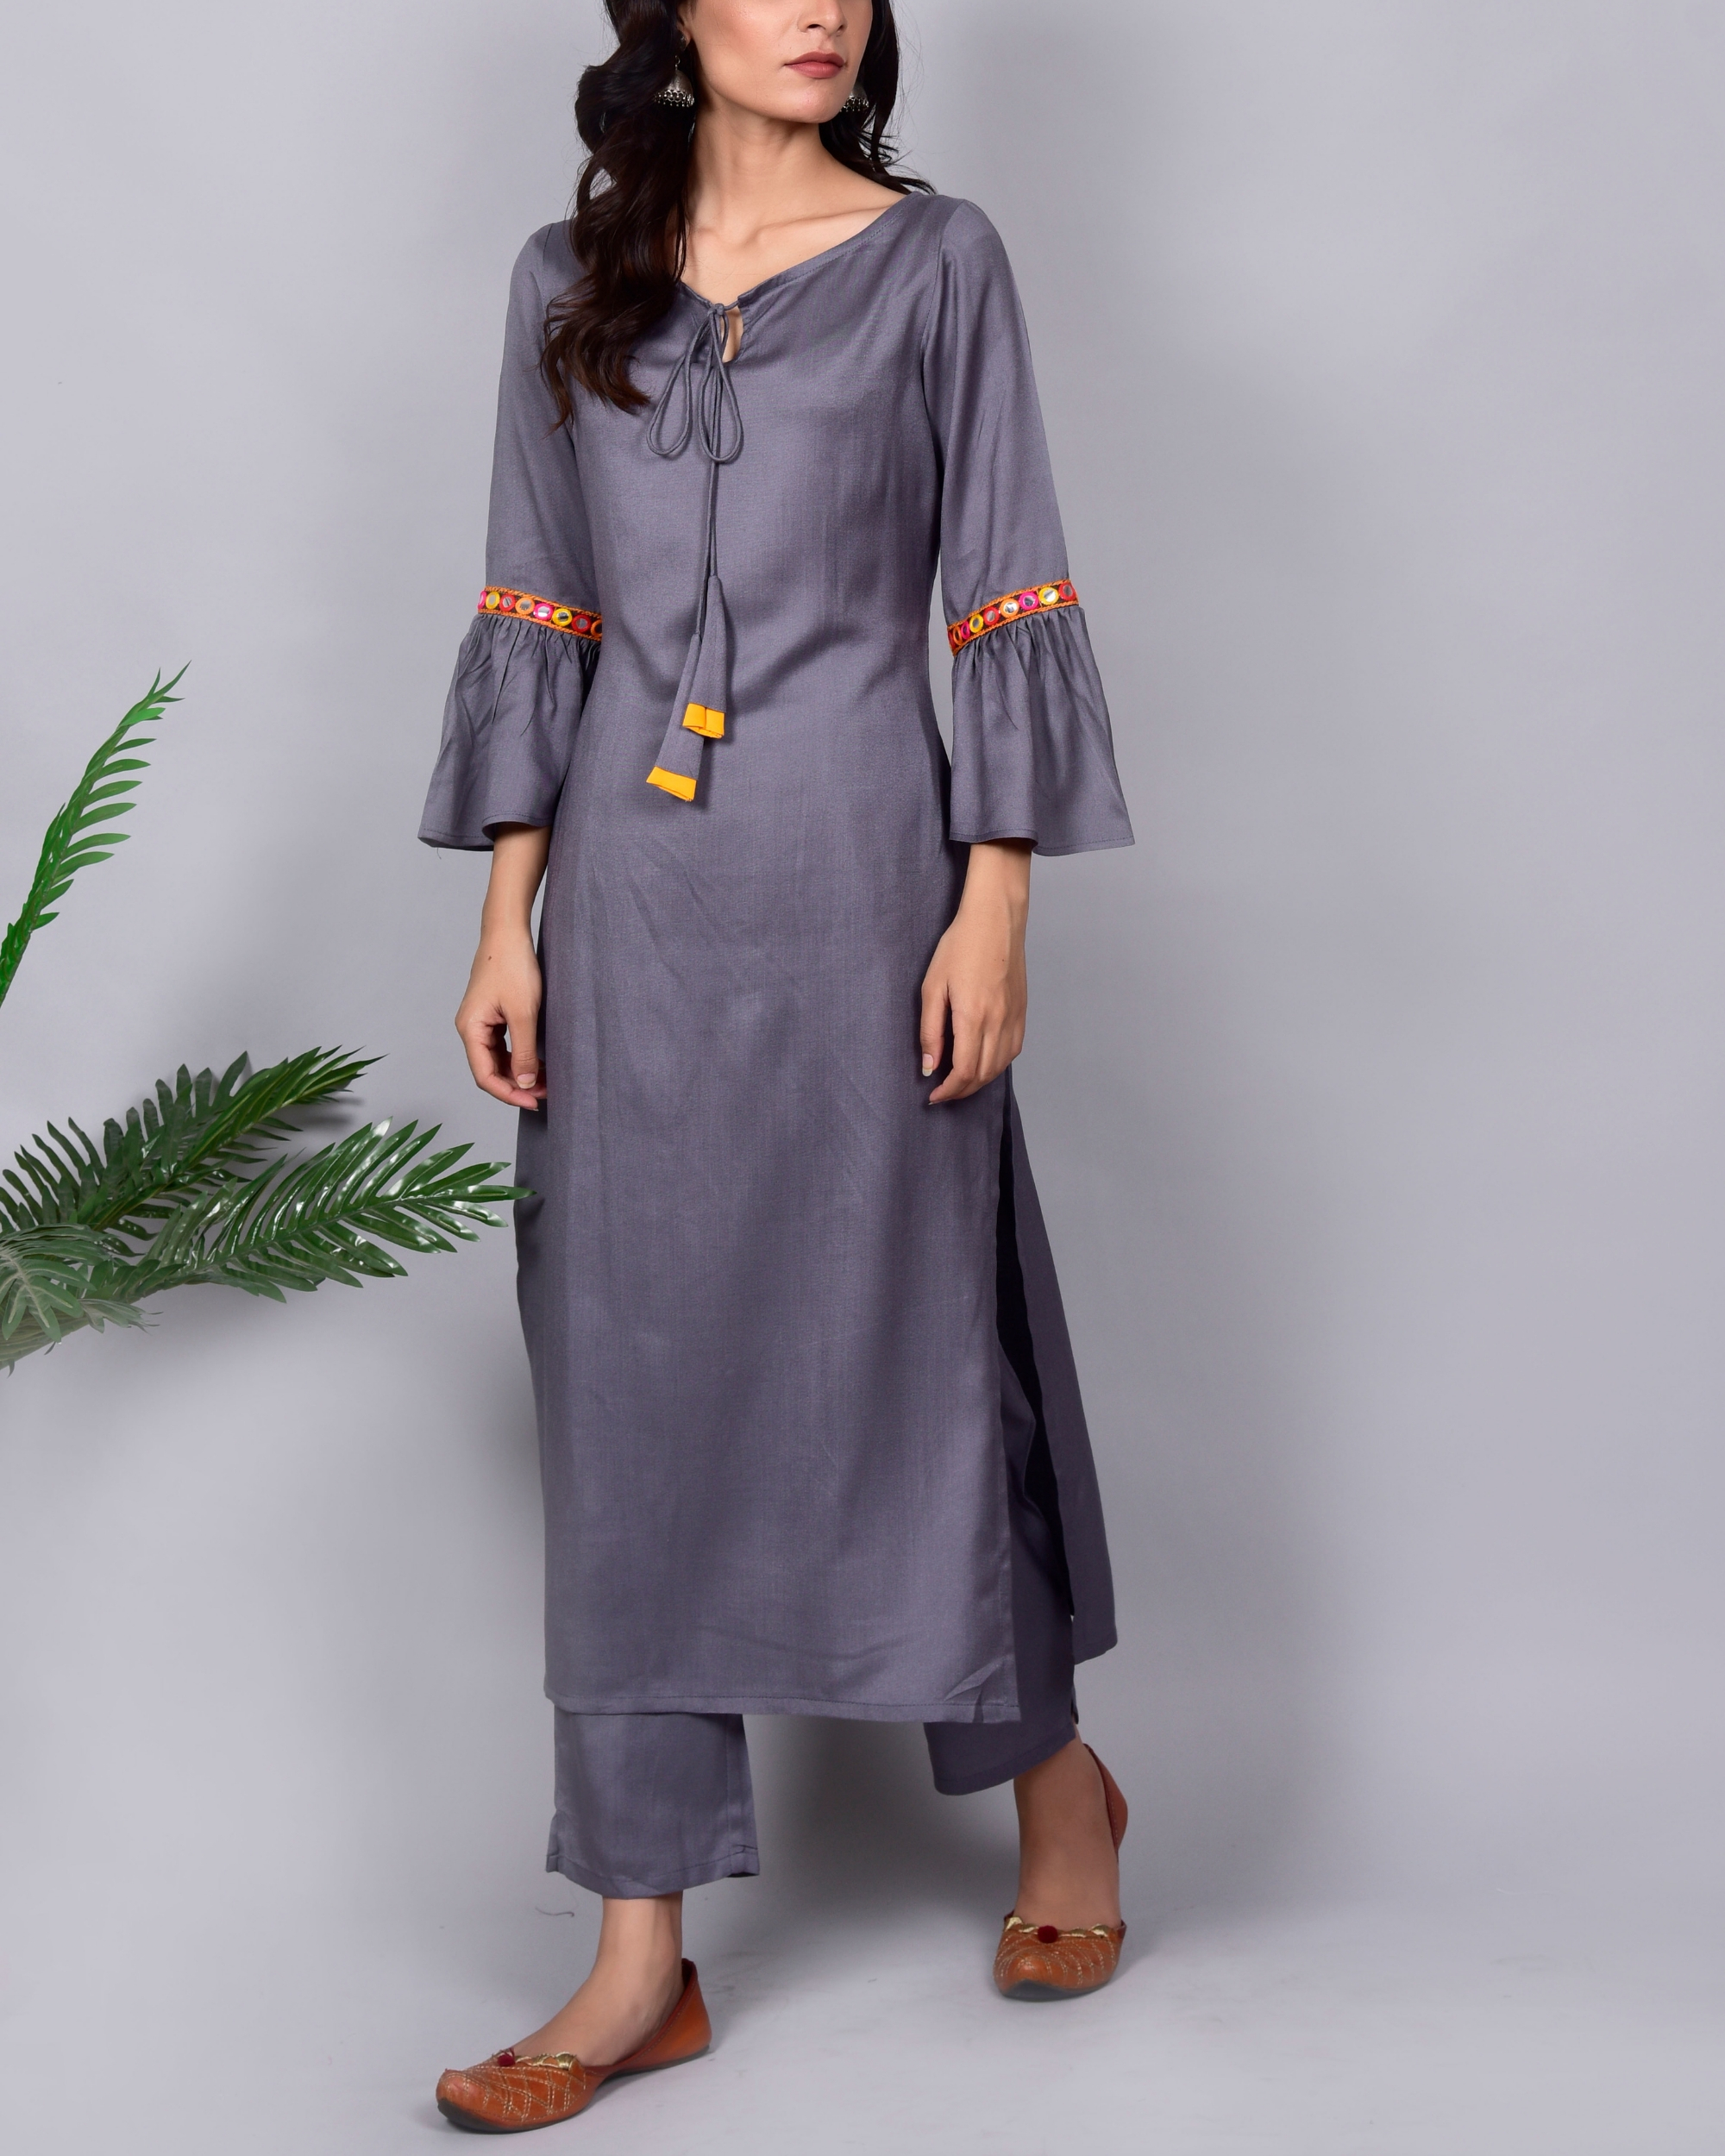 Lace embellished bell sleeves kurta set - set of two